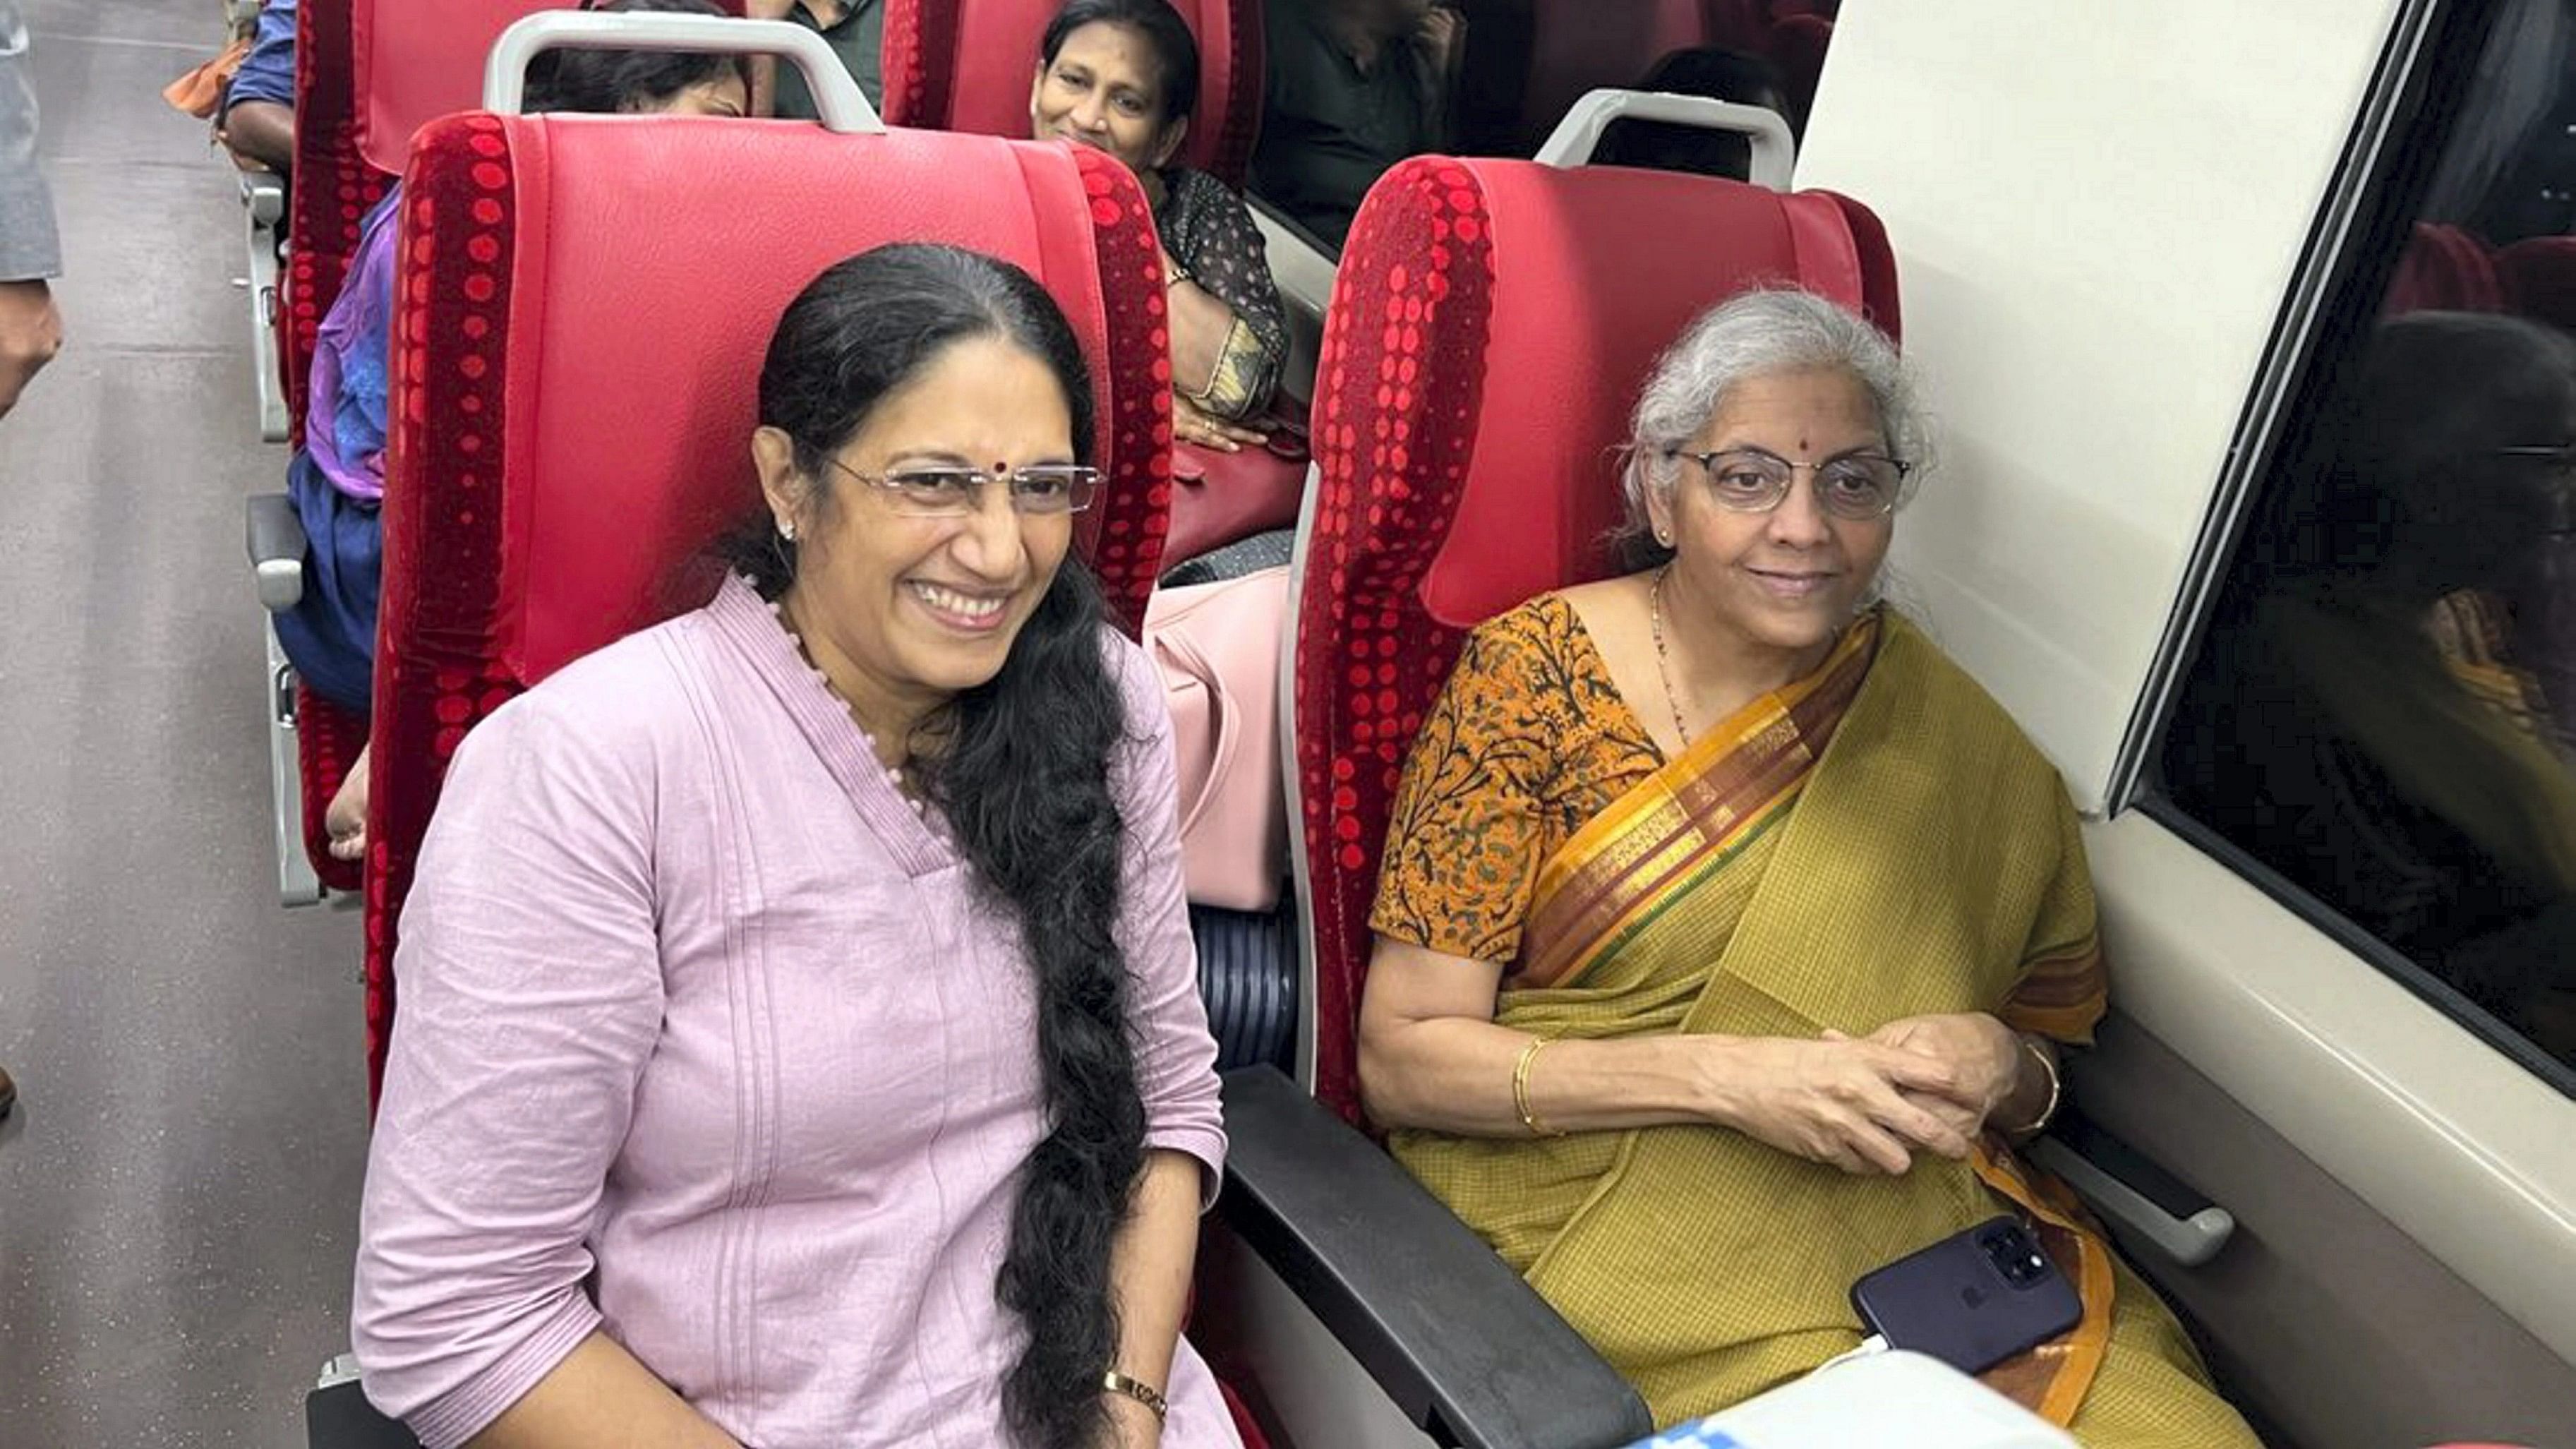 <div class="paragraphs"><p>Union Finance Minister Nirmala Sitharaman with a passenger in Vande Bharat Express train.</p></div>